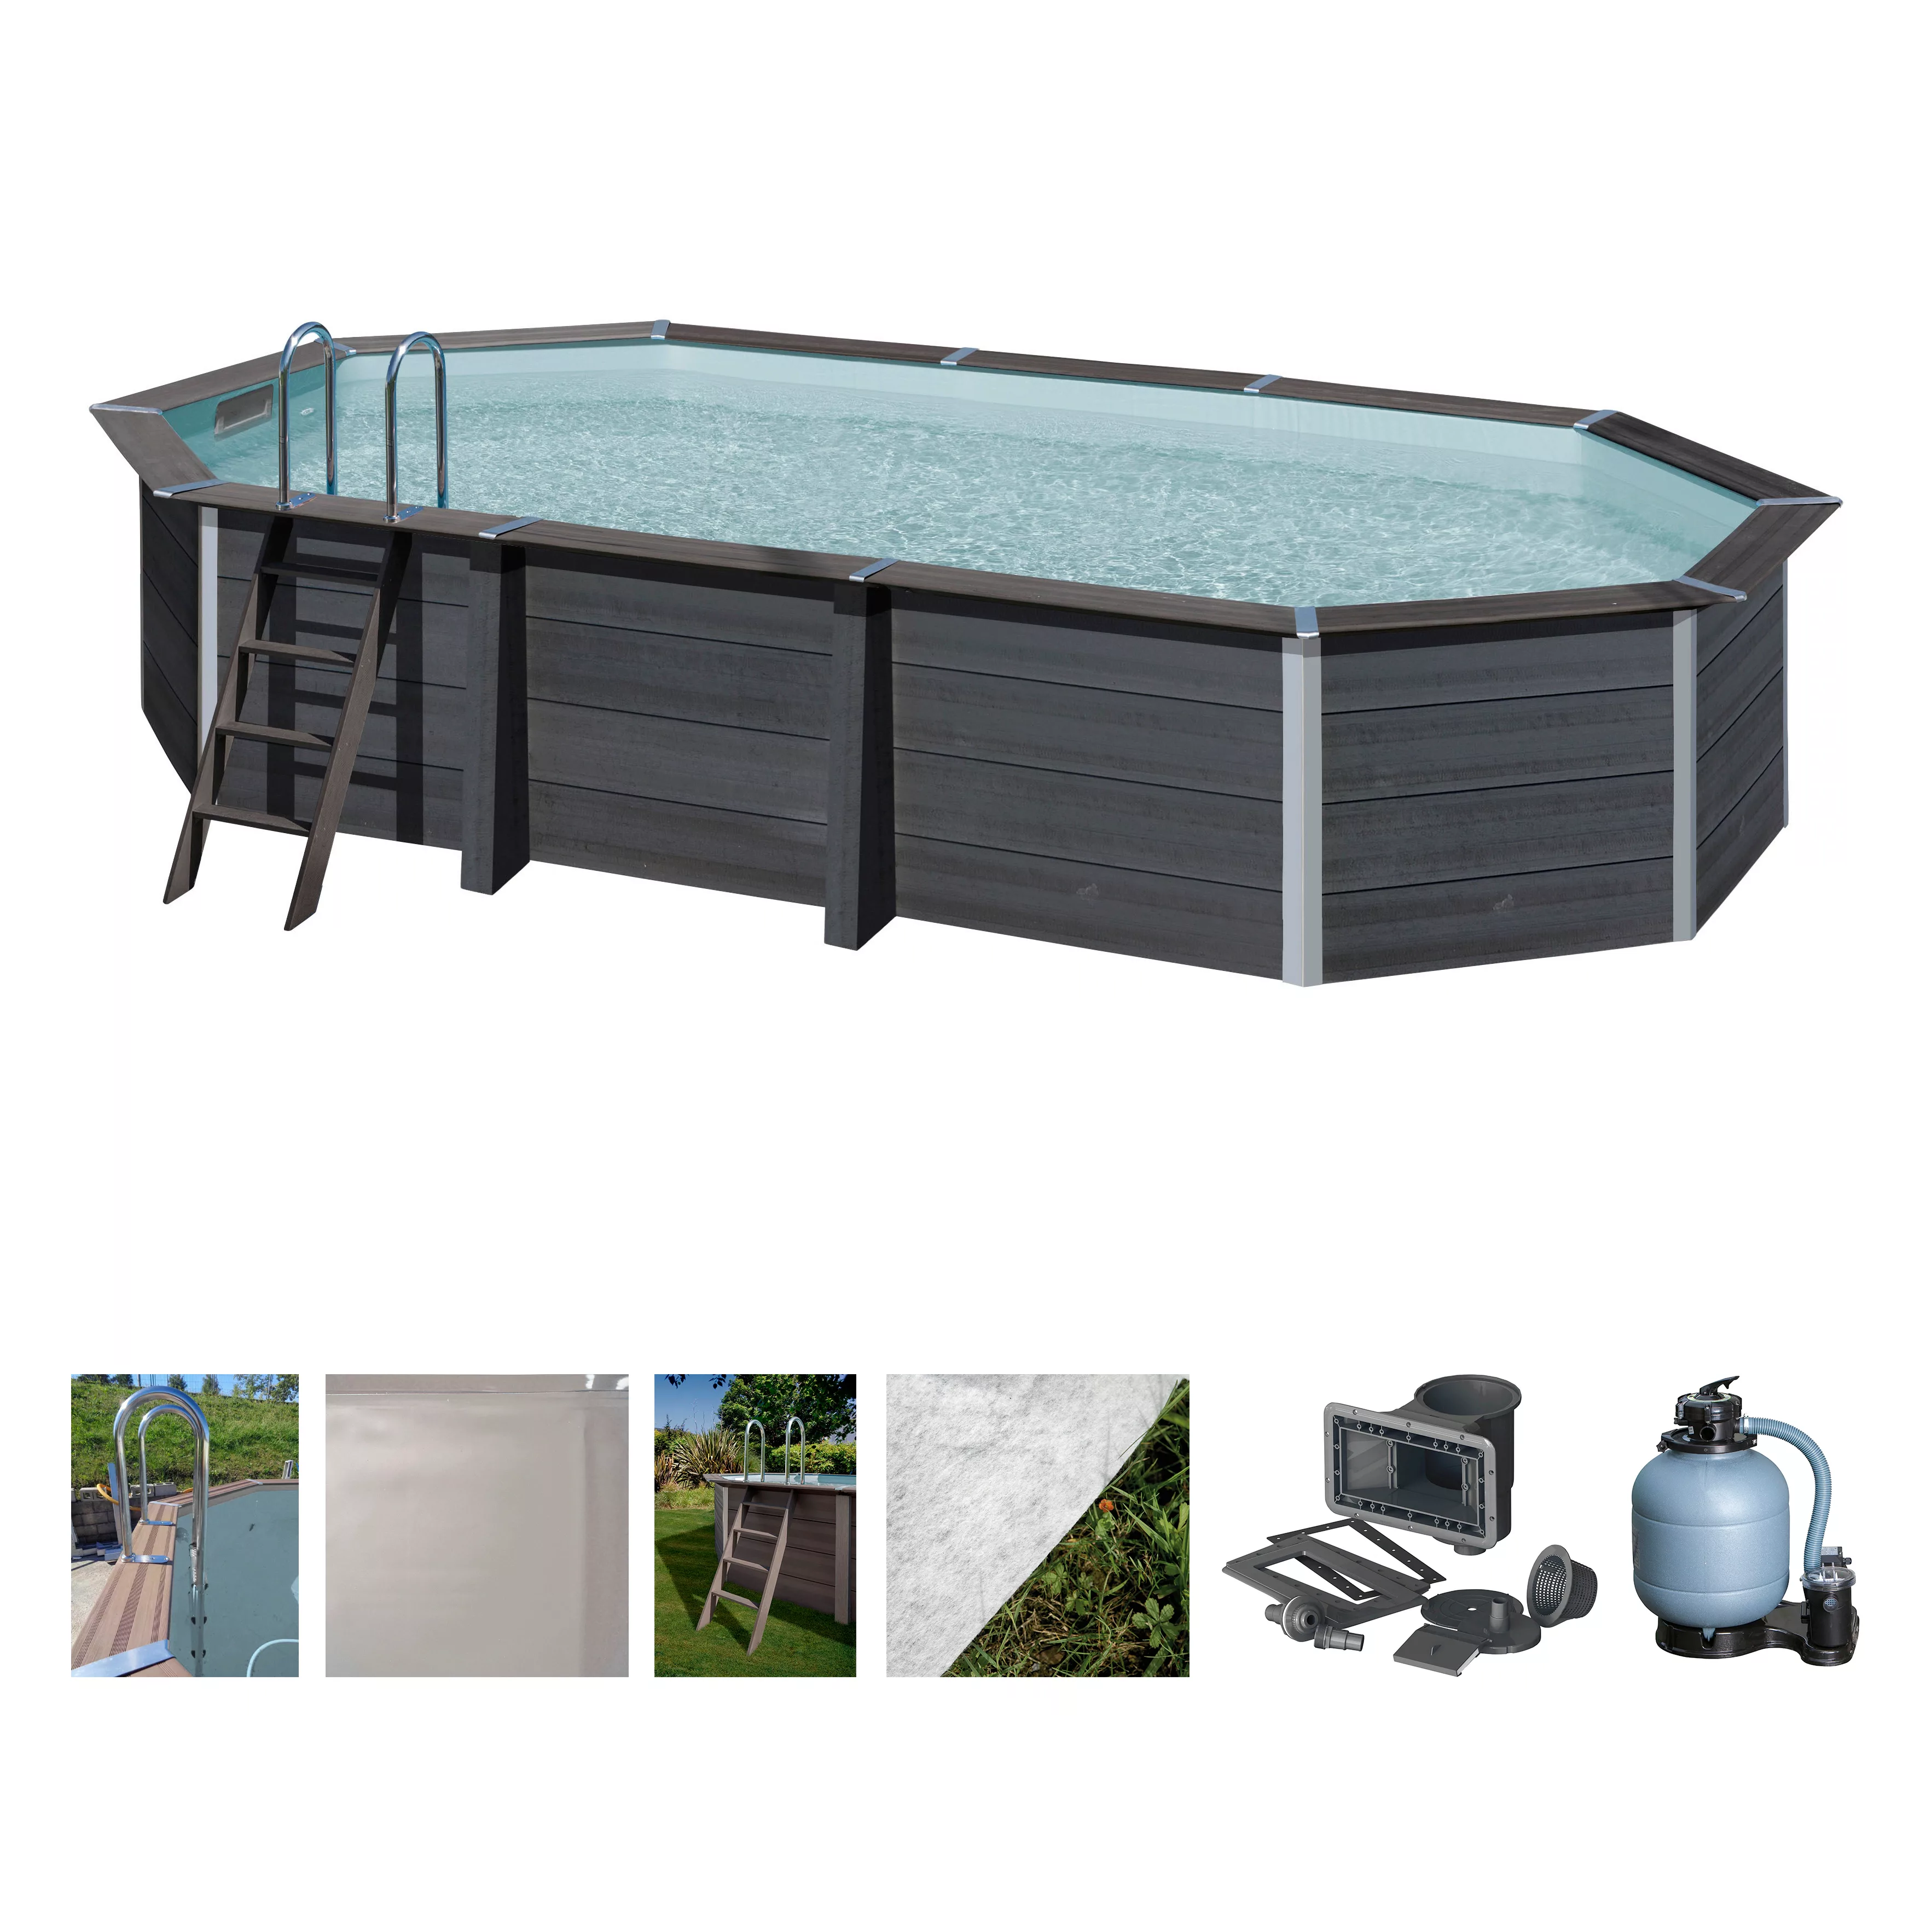 Gre Composite Pool Avantgarde Oval 664 cm x 386 cm x 124 cm günstig online kaufen